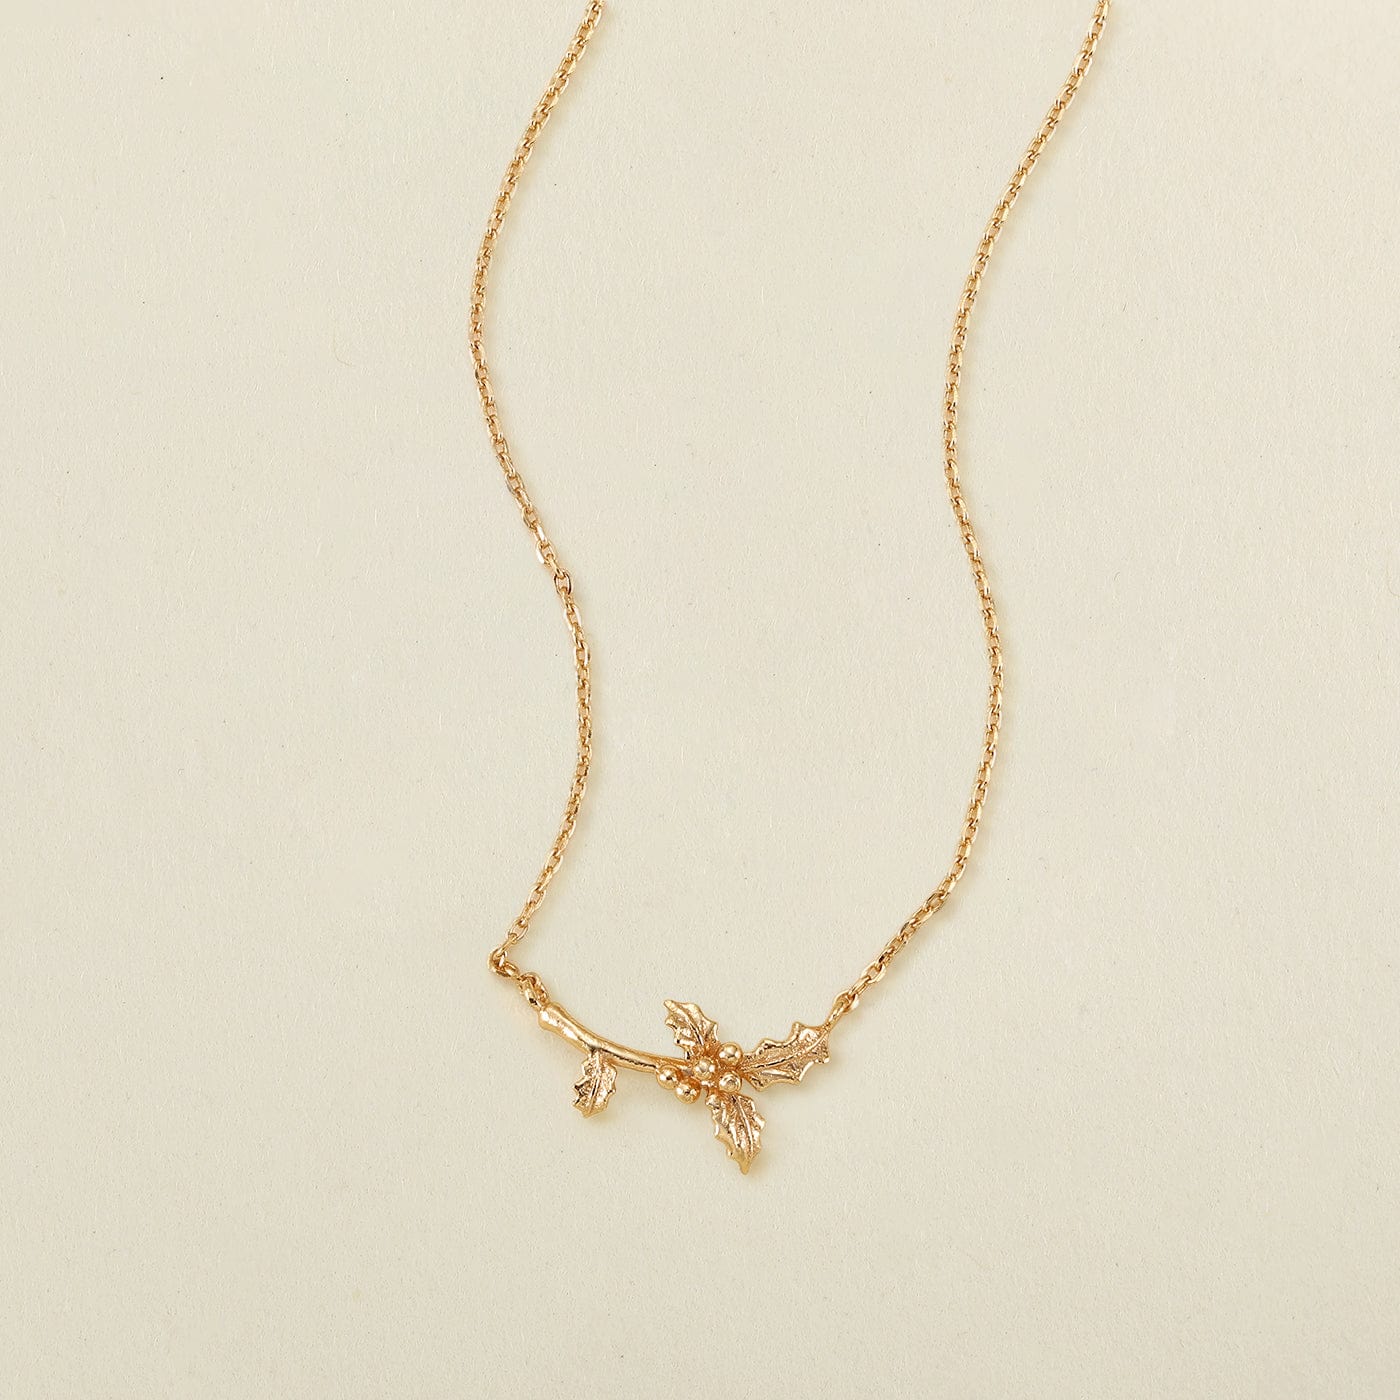 December Everbloom Birth Flower Necklace Gold Vermeil Necklace